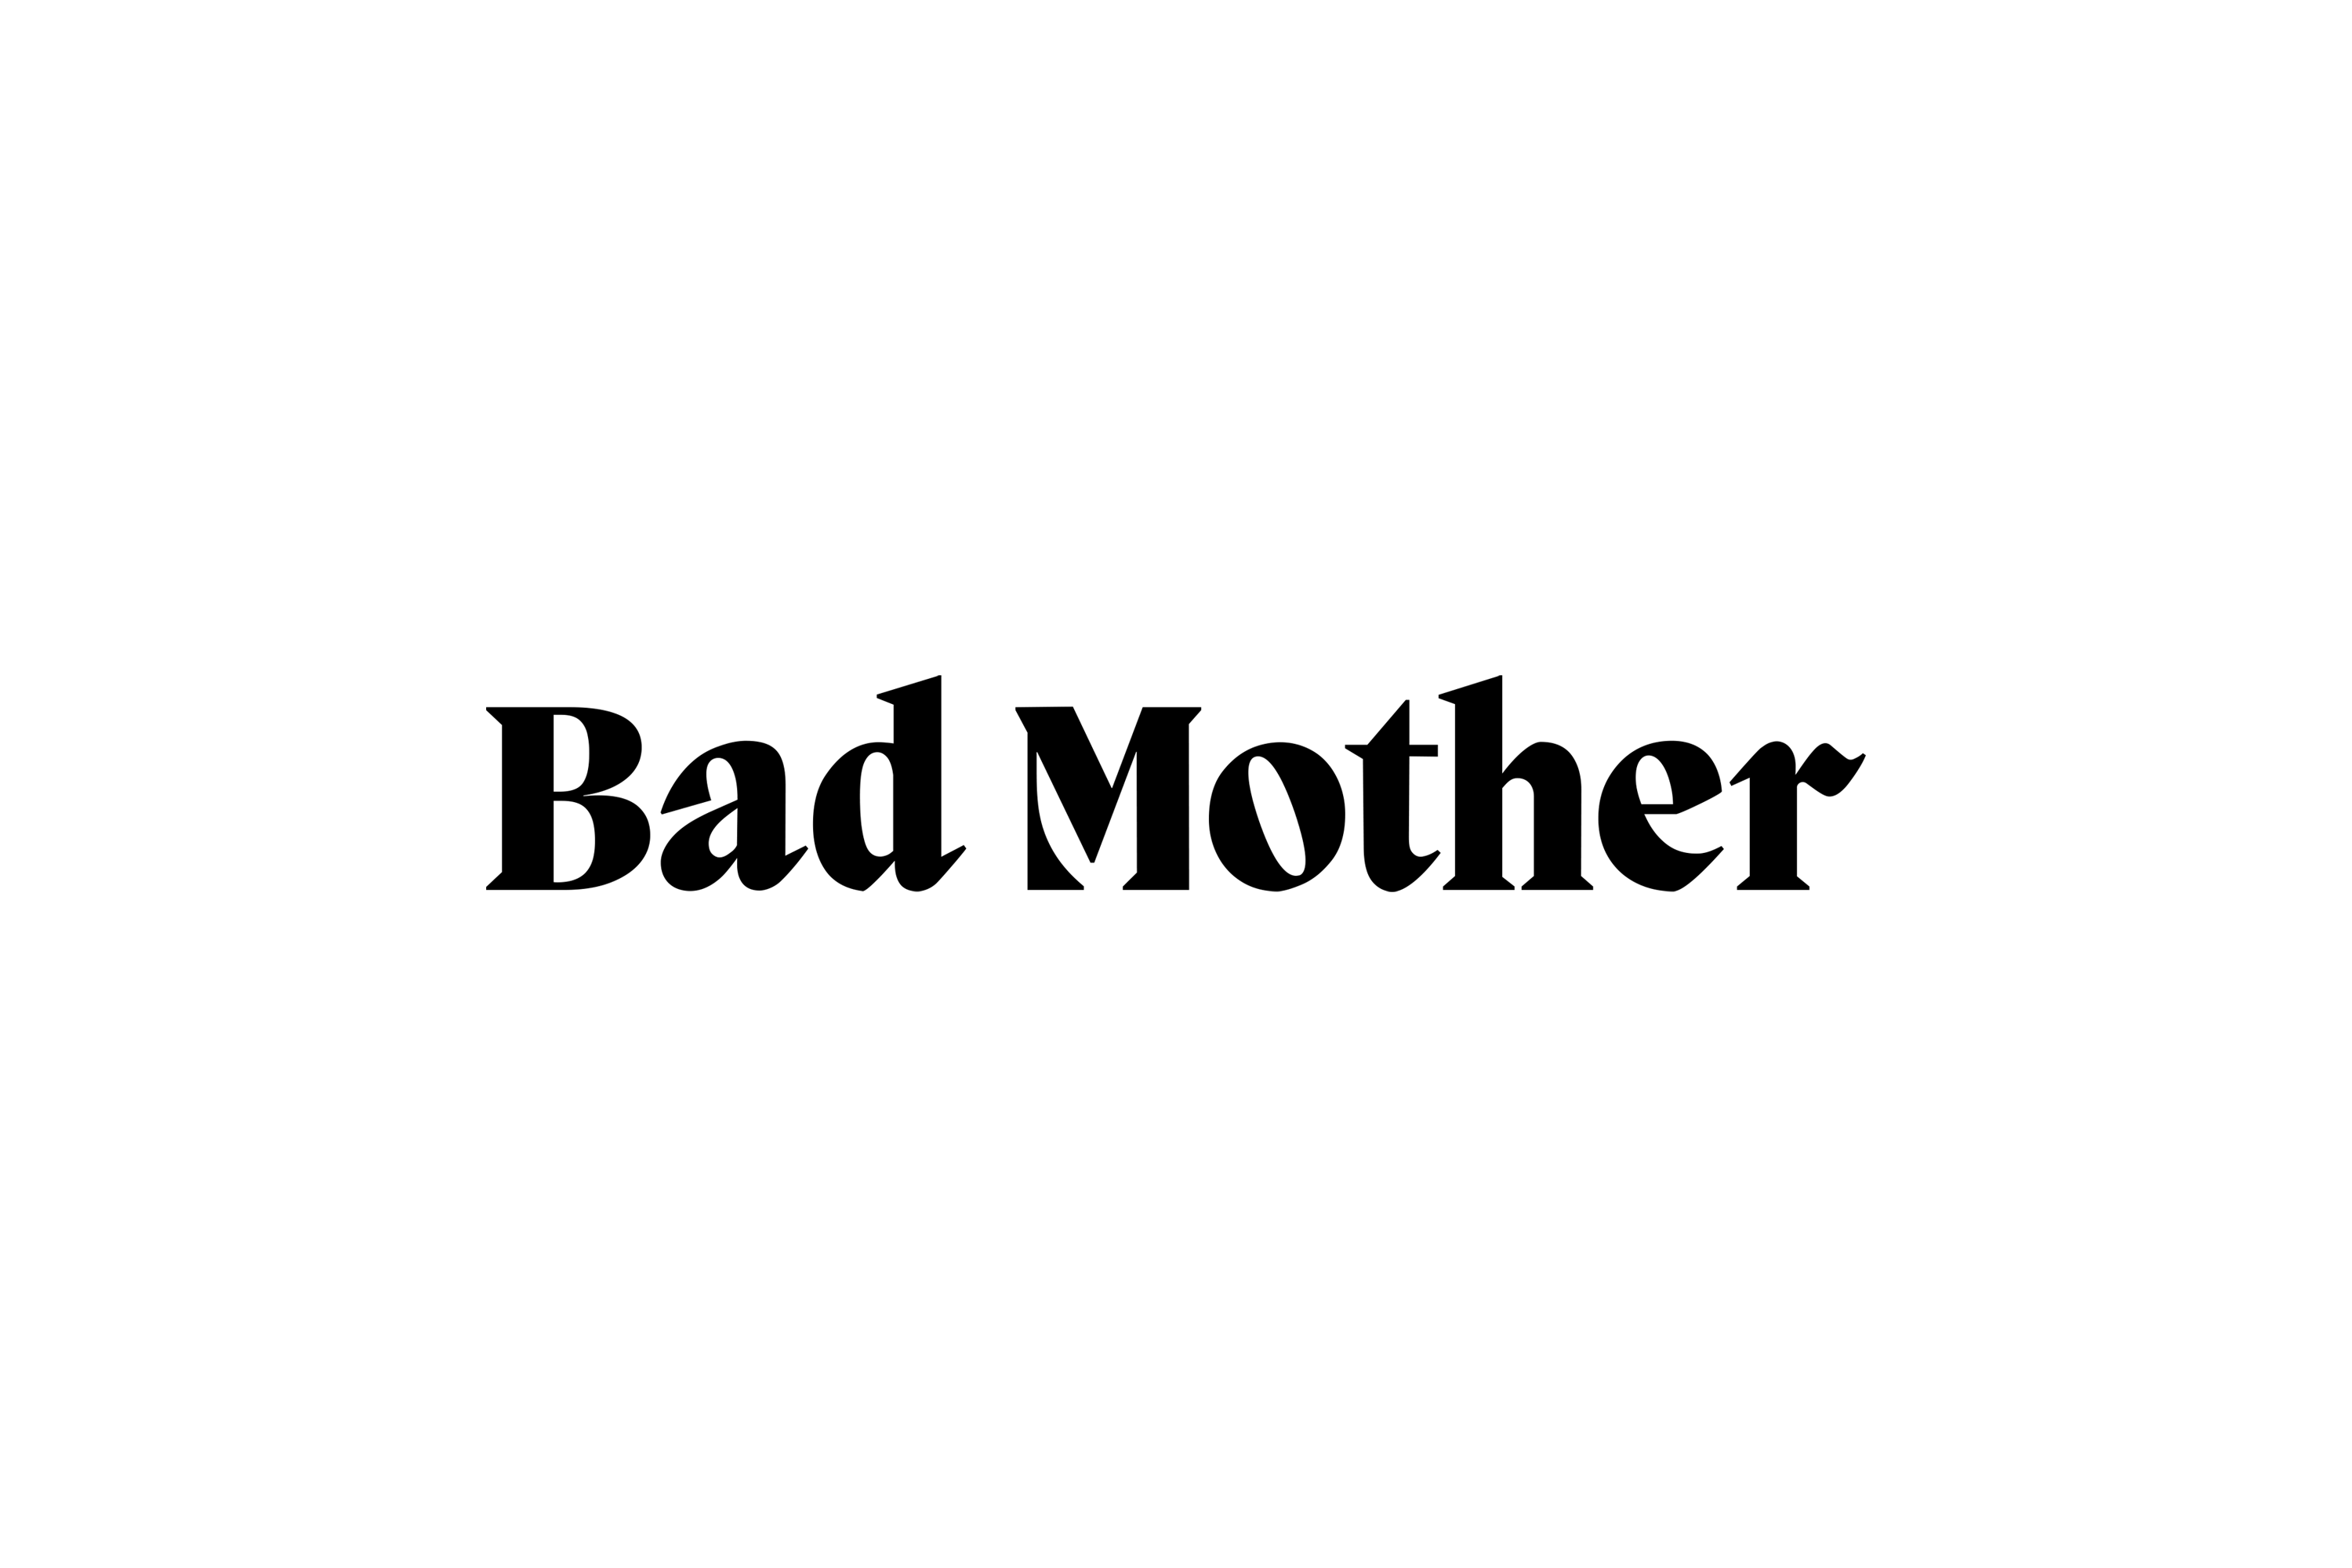 Chris-Reynolds-Logos-Bad-Mother-1